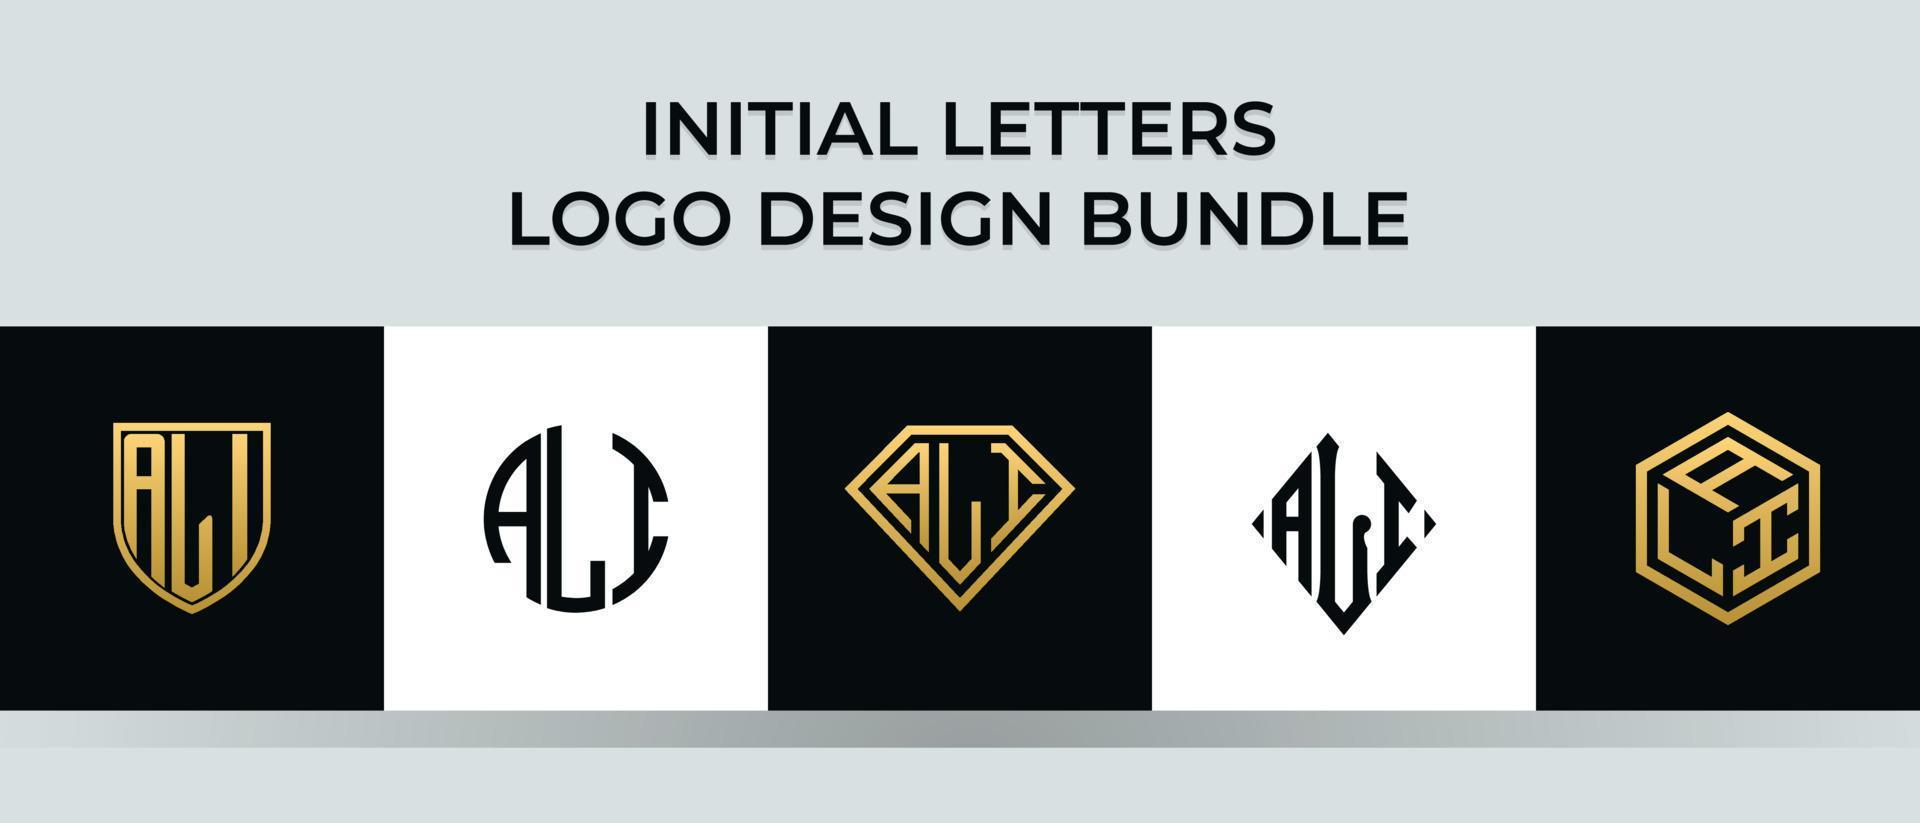 Initial letters ALI logo designs Bundle vector